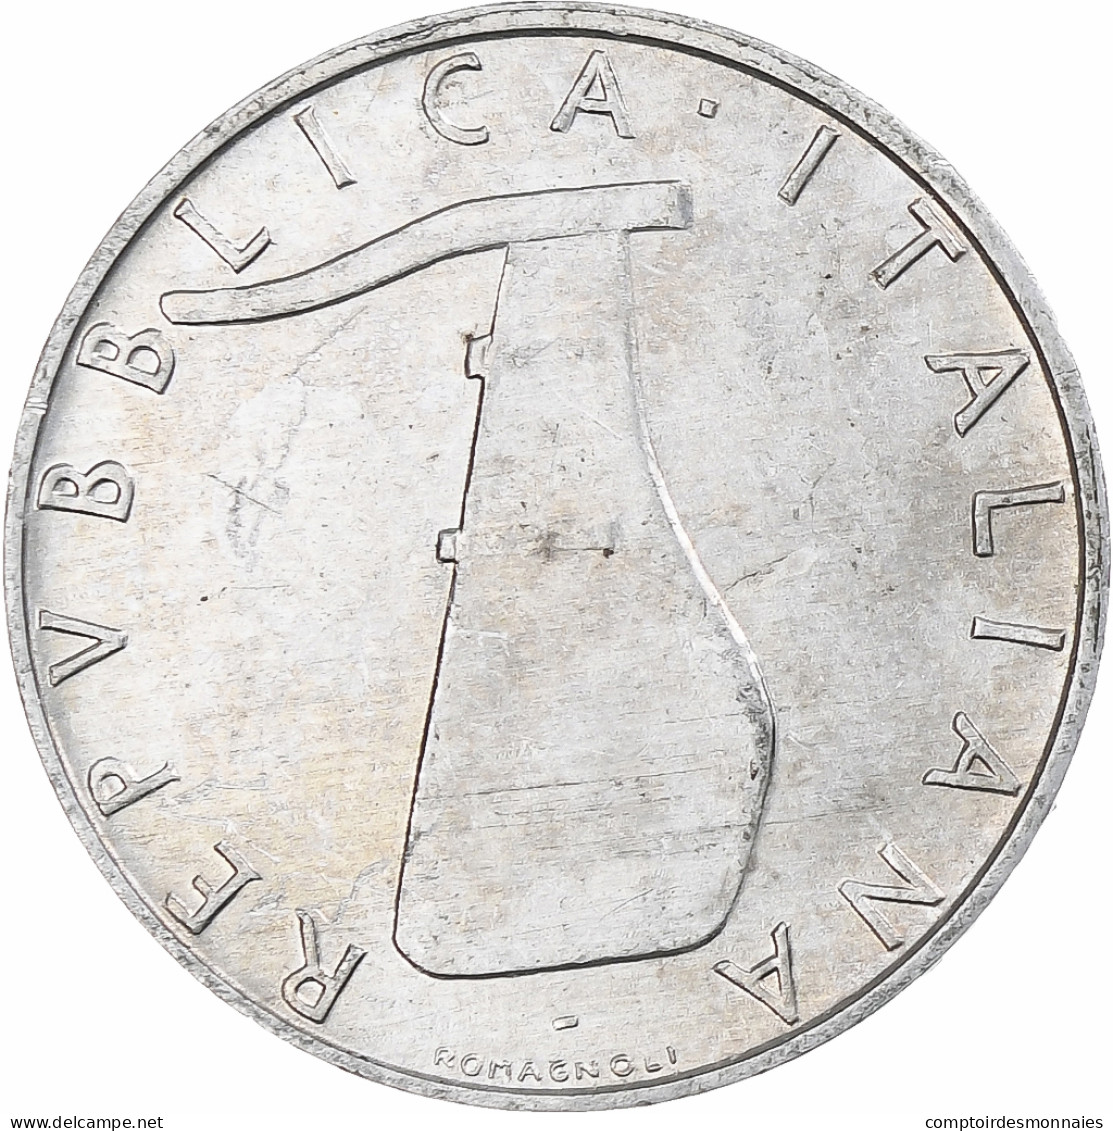 Italie, 5 Lire, 1987 - 5 Lire